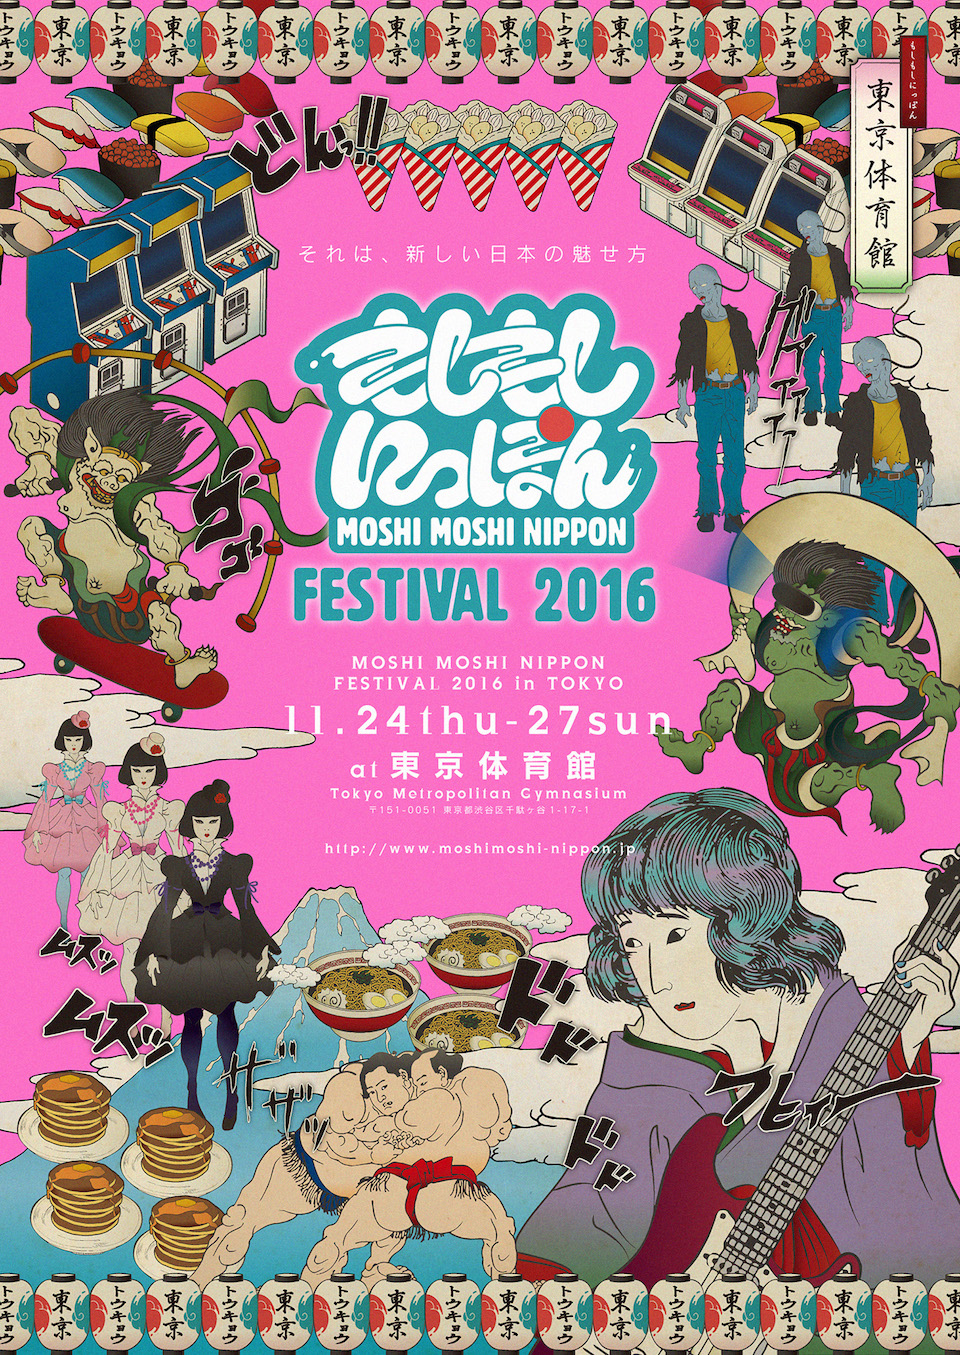 MOSHI MOSHI NIPPON FESTIVAL 2016 in TOKYO